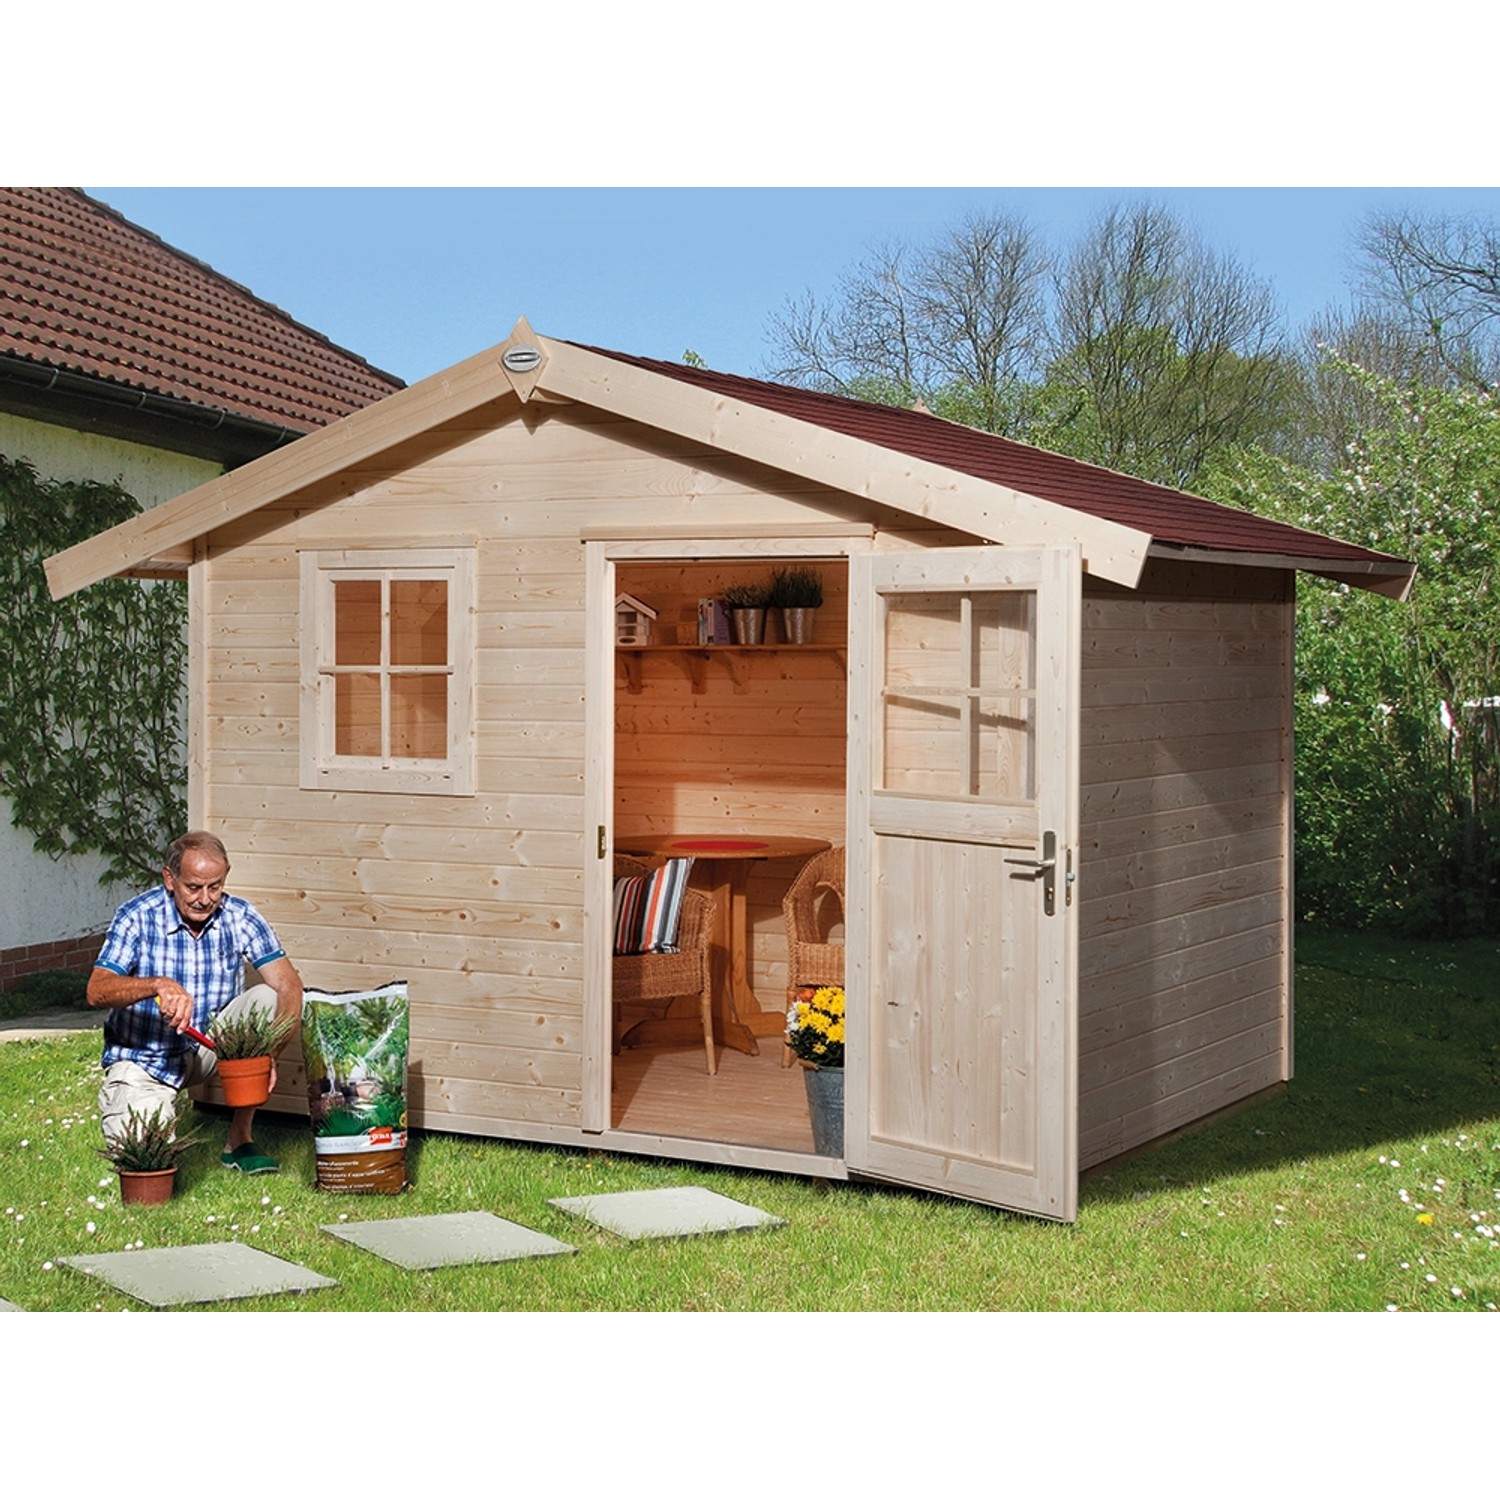 OBI Outdoor Living Holz-Gartenhaus Bozen Satteldach Unbehandelt 300 cm x 270 cm von OBI Outdoor Living